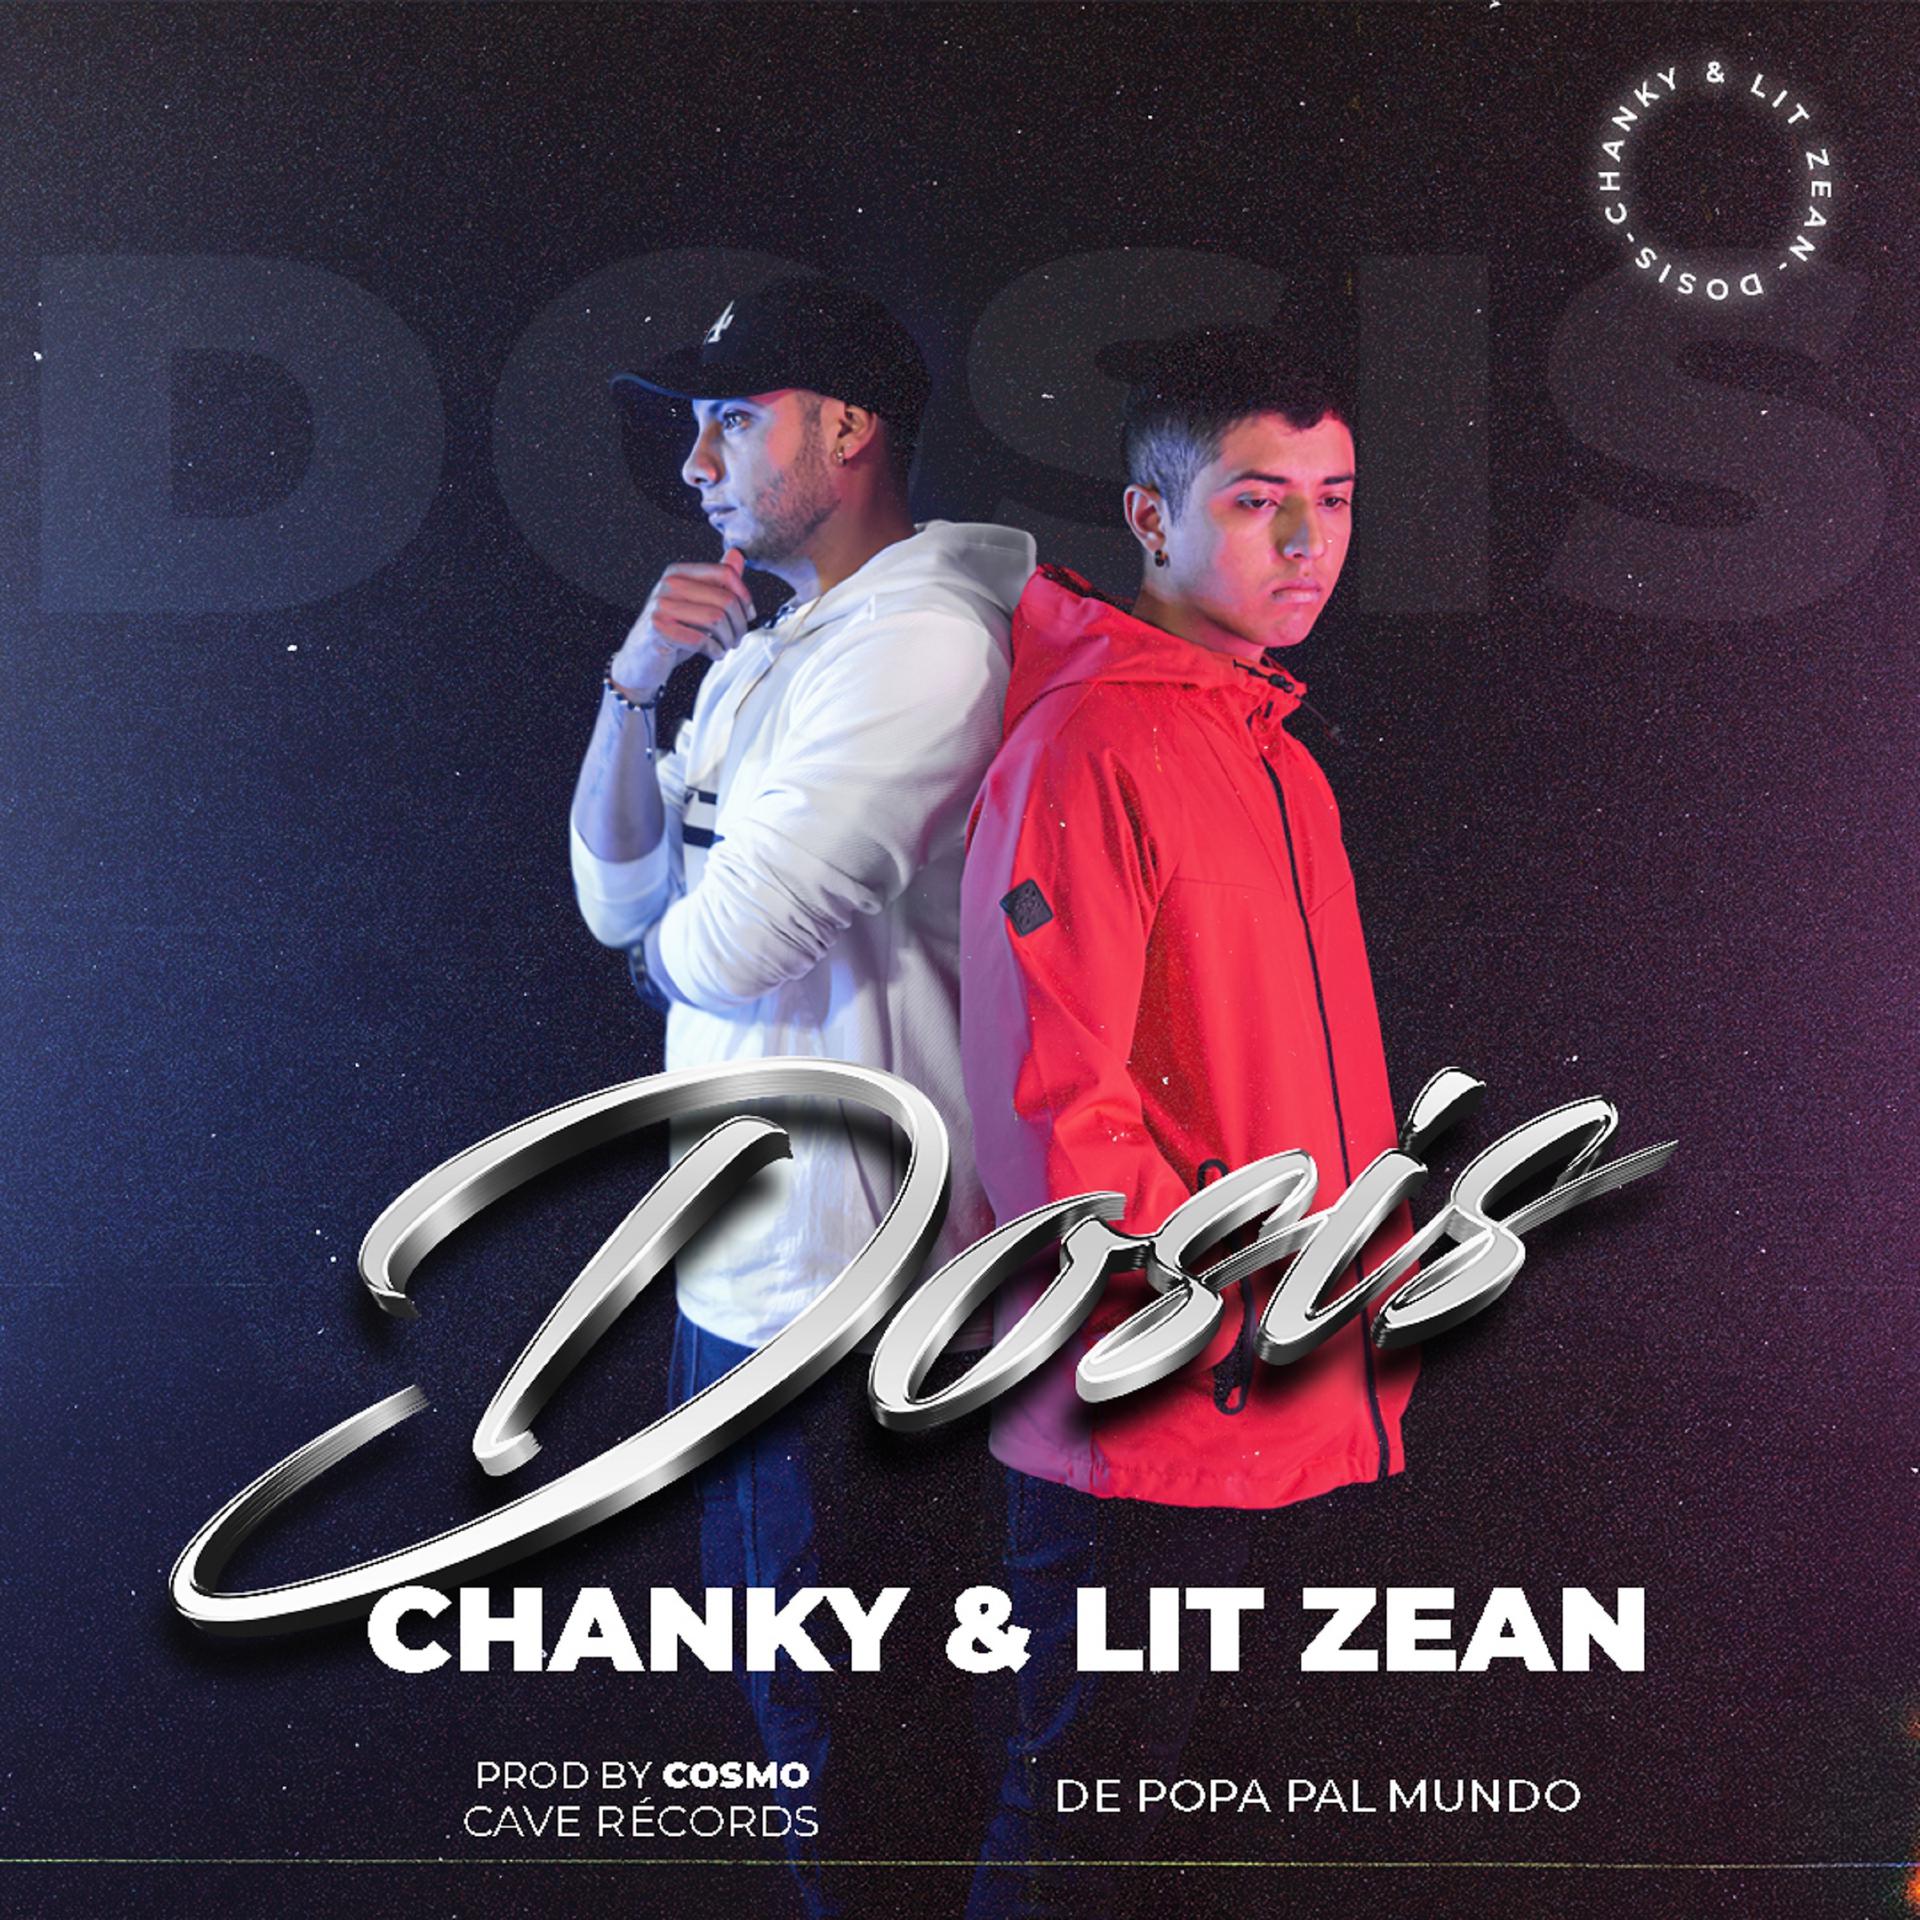 Постер альбома Dosis